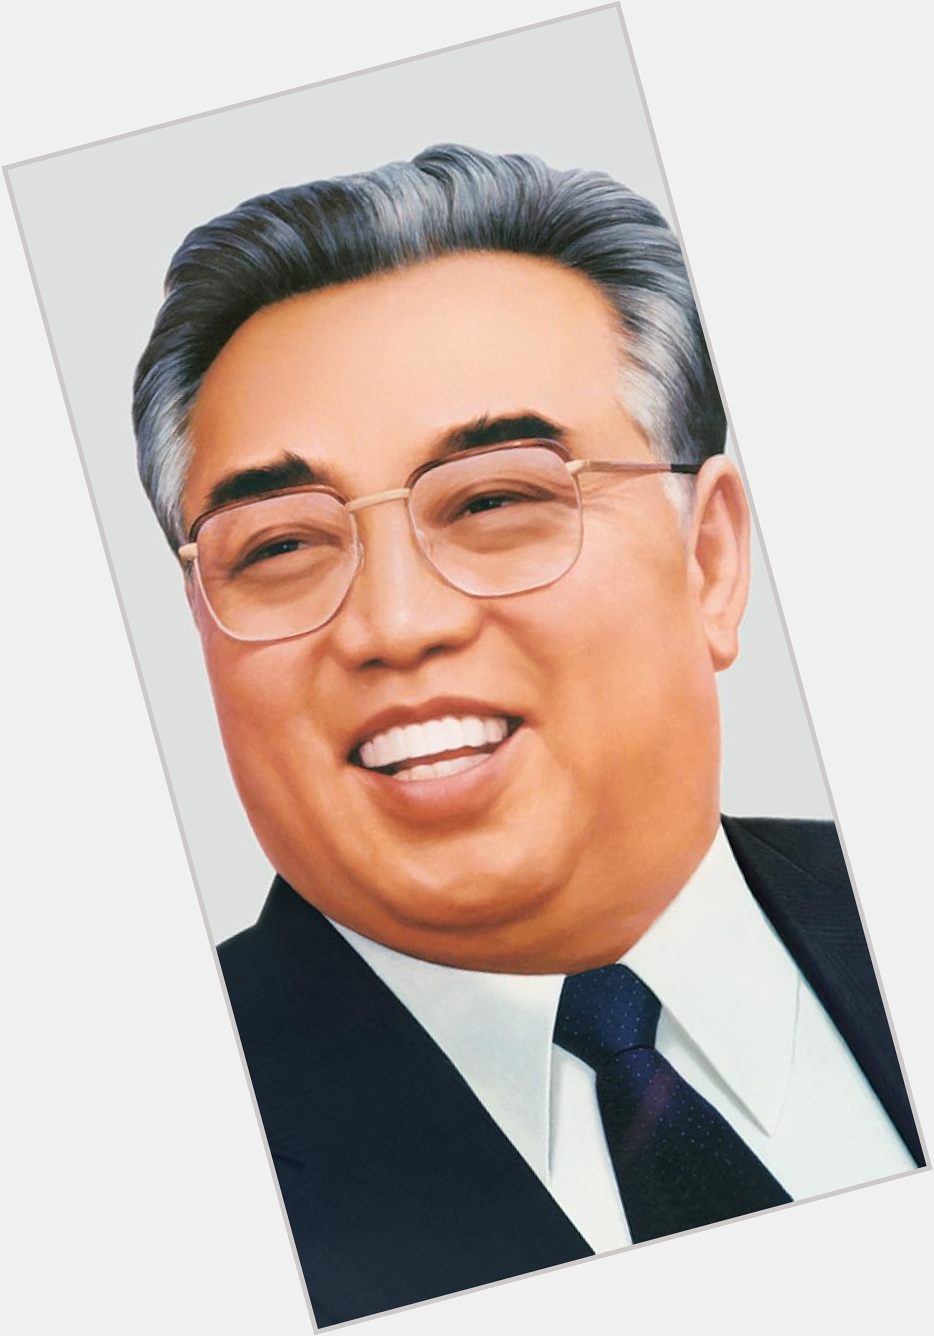 <a href="/hot-men/kim-il-sung/where-dating-news-photos">Kim Il Sung</a> Average body,  salt and pepper hair & hairstyles